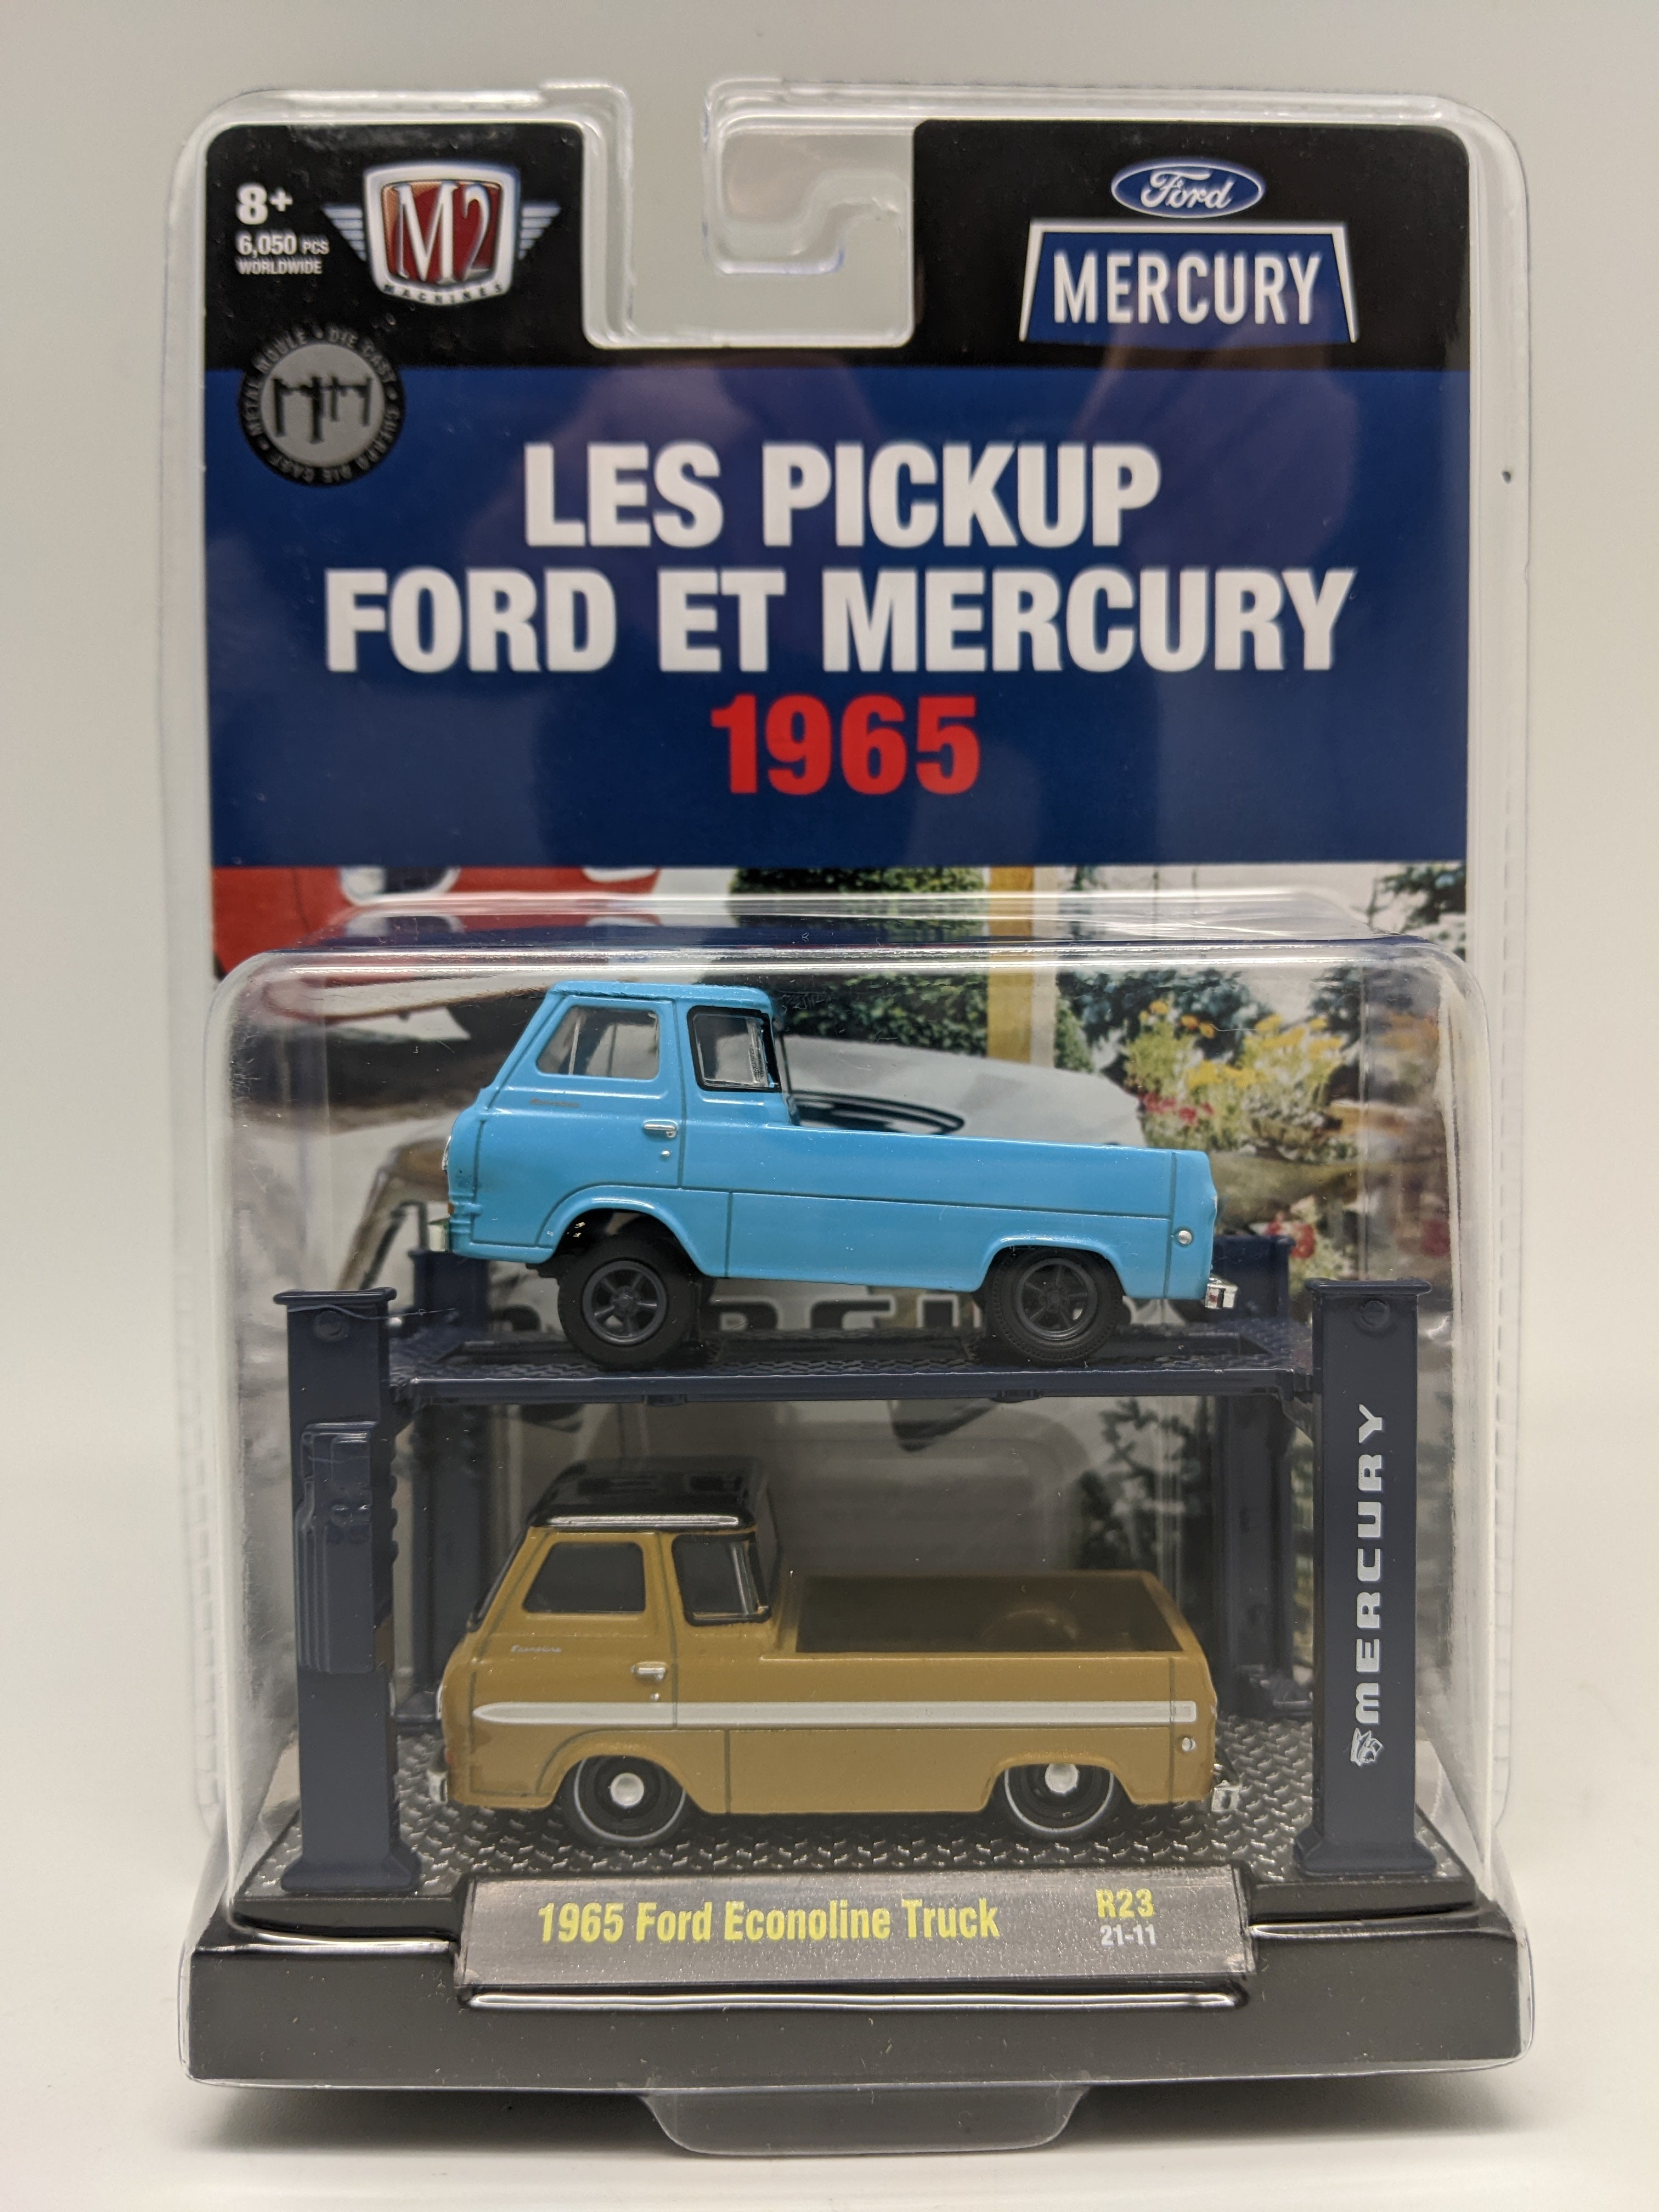 M2 1965 Ford Econoline Auto Lift - Les Pickup Ford Et Mercury 